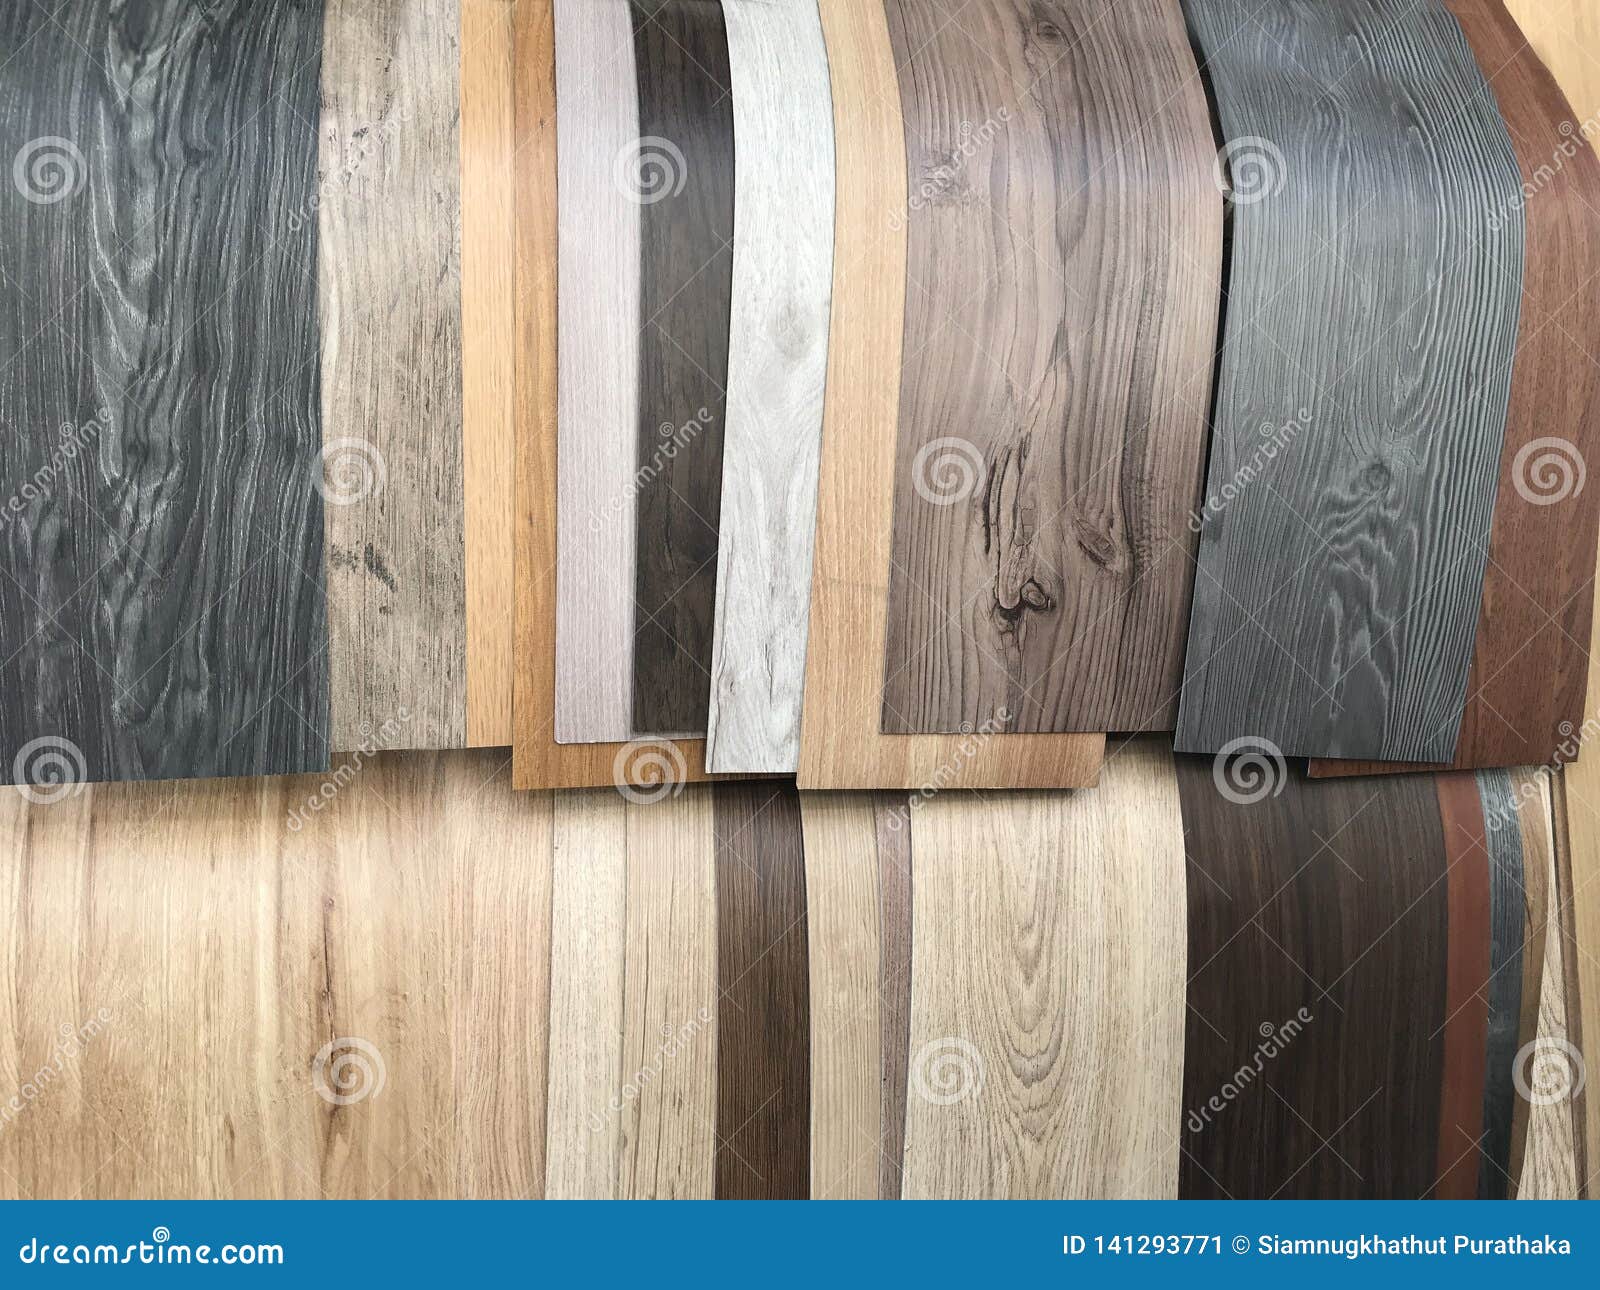 Sample Of Wood Vinyl Laminate Tiles Wood Laminate Veneer